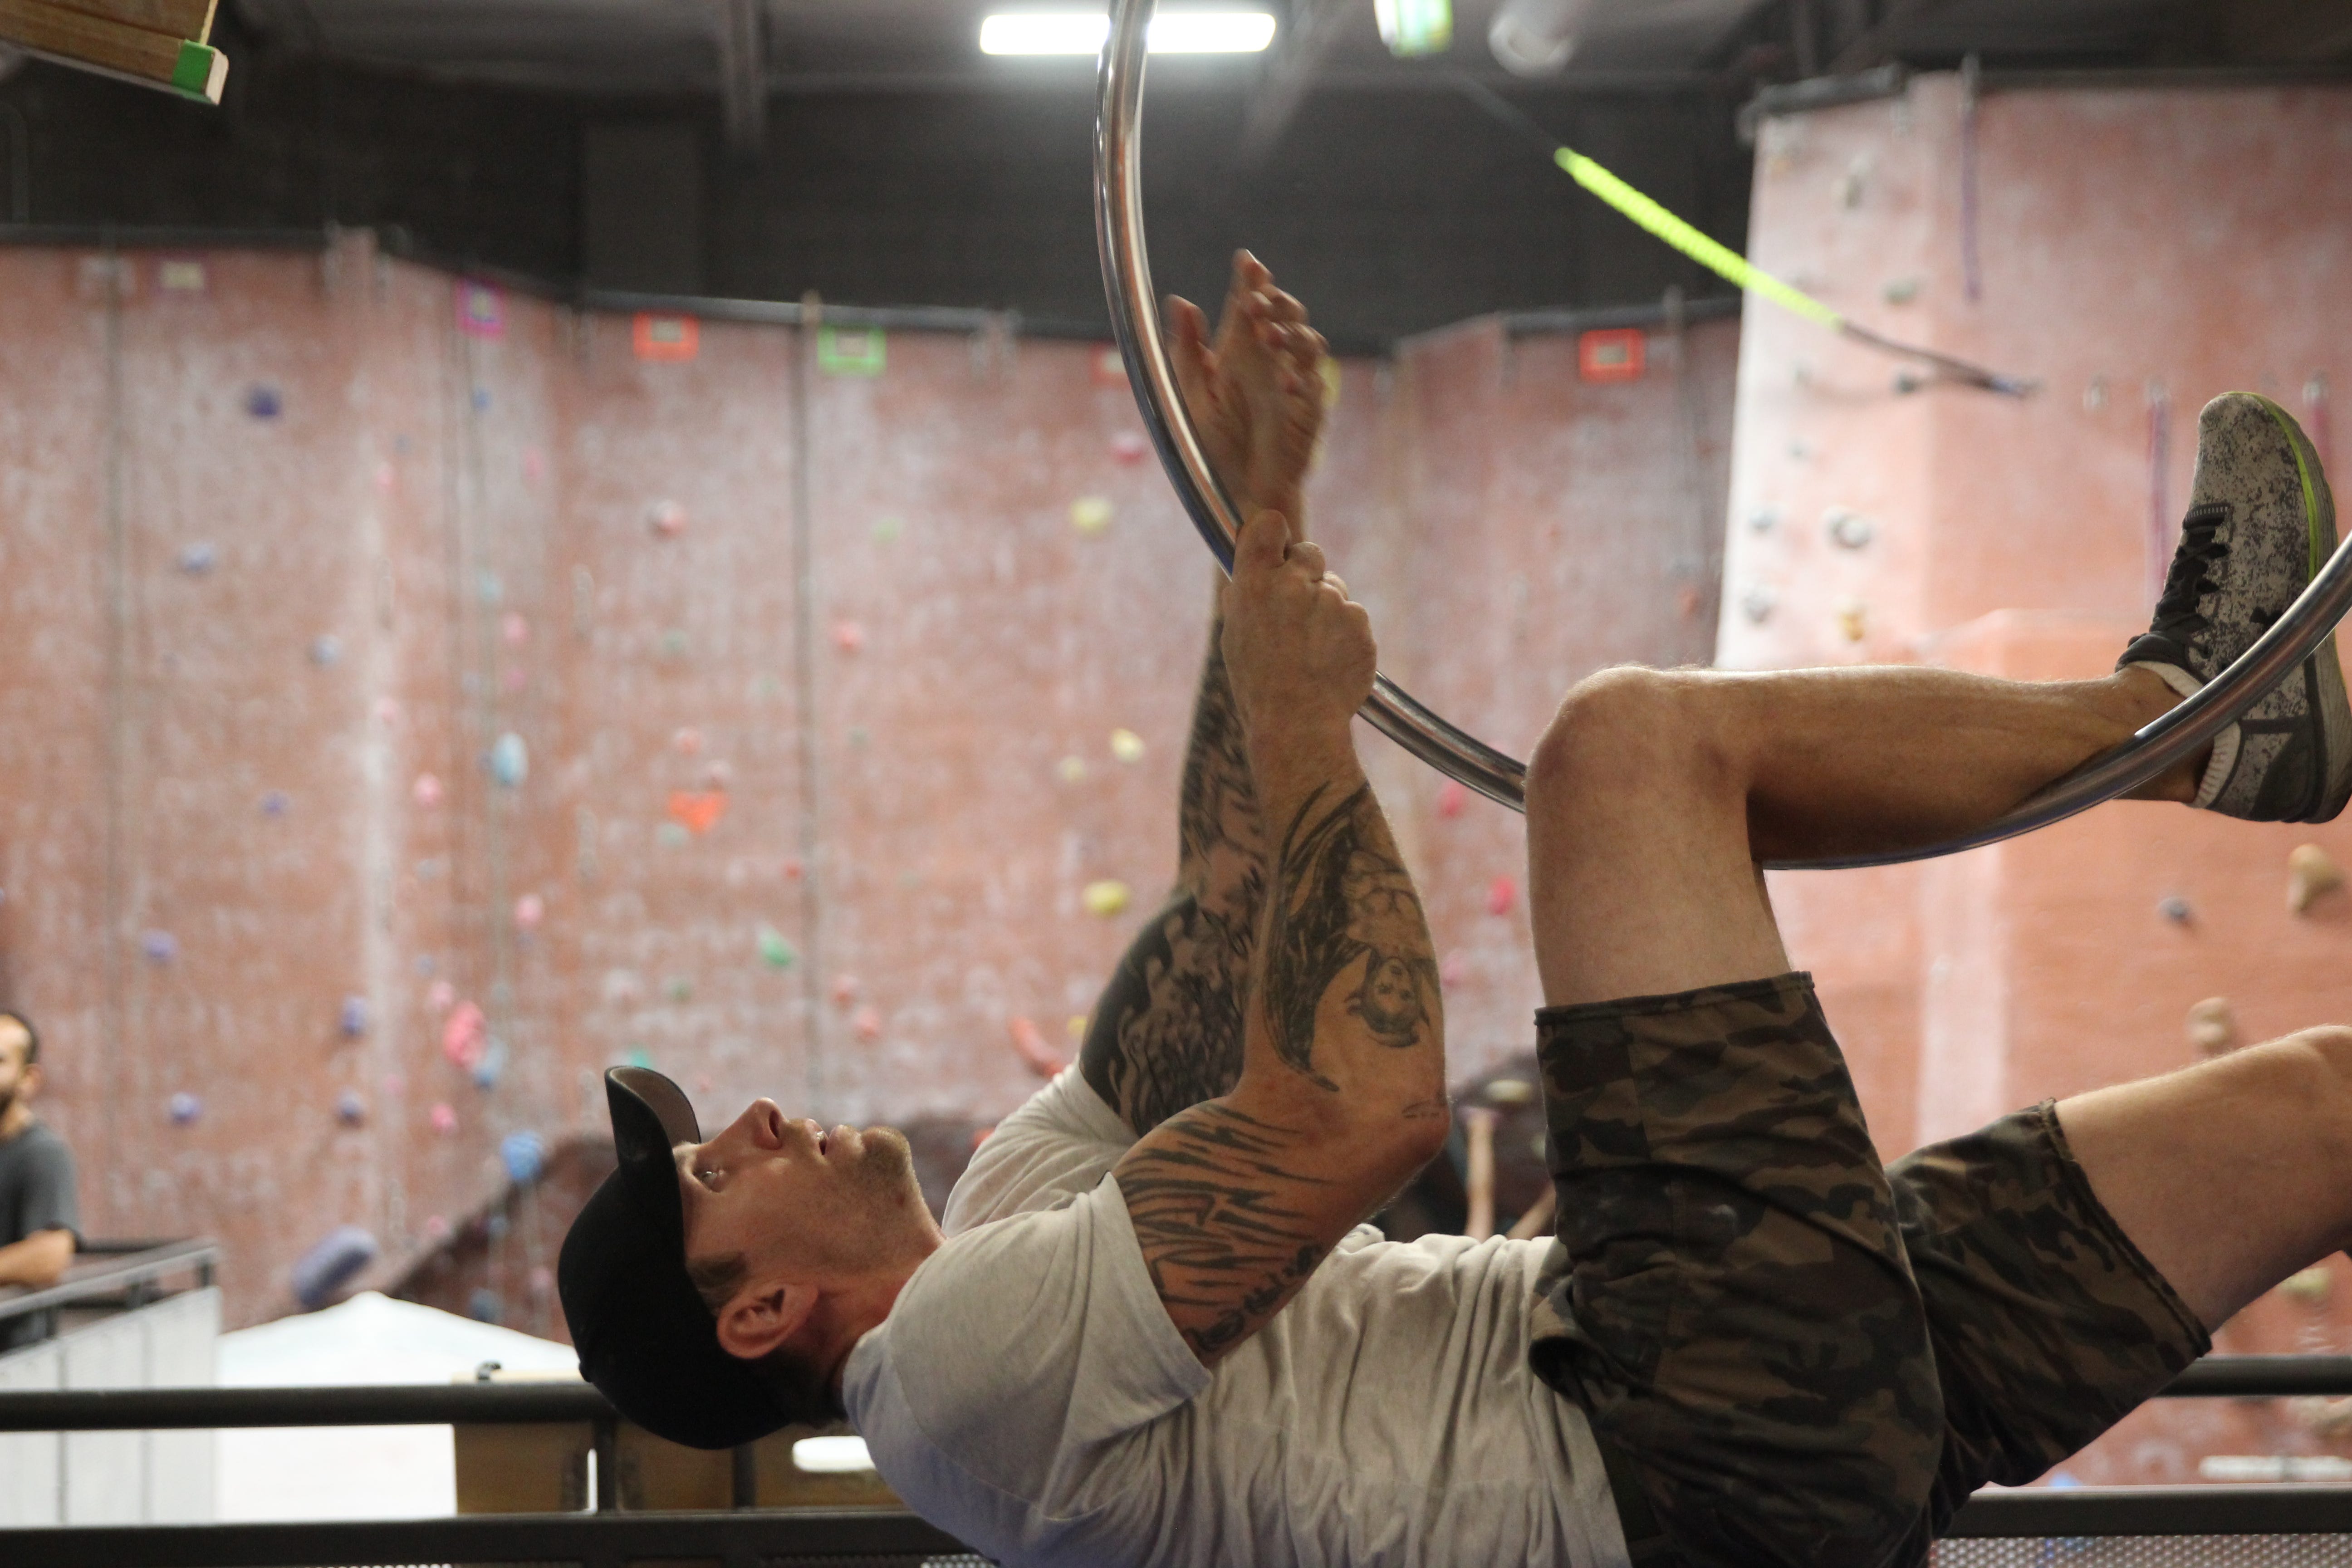 American Ninja Warrior' leads to growth of ninja-training gyms